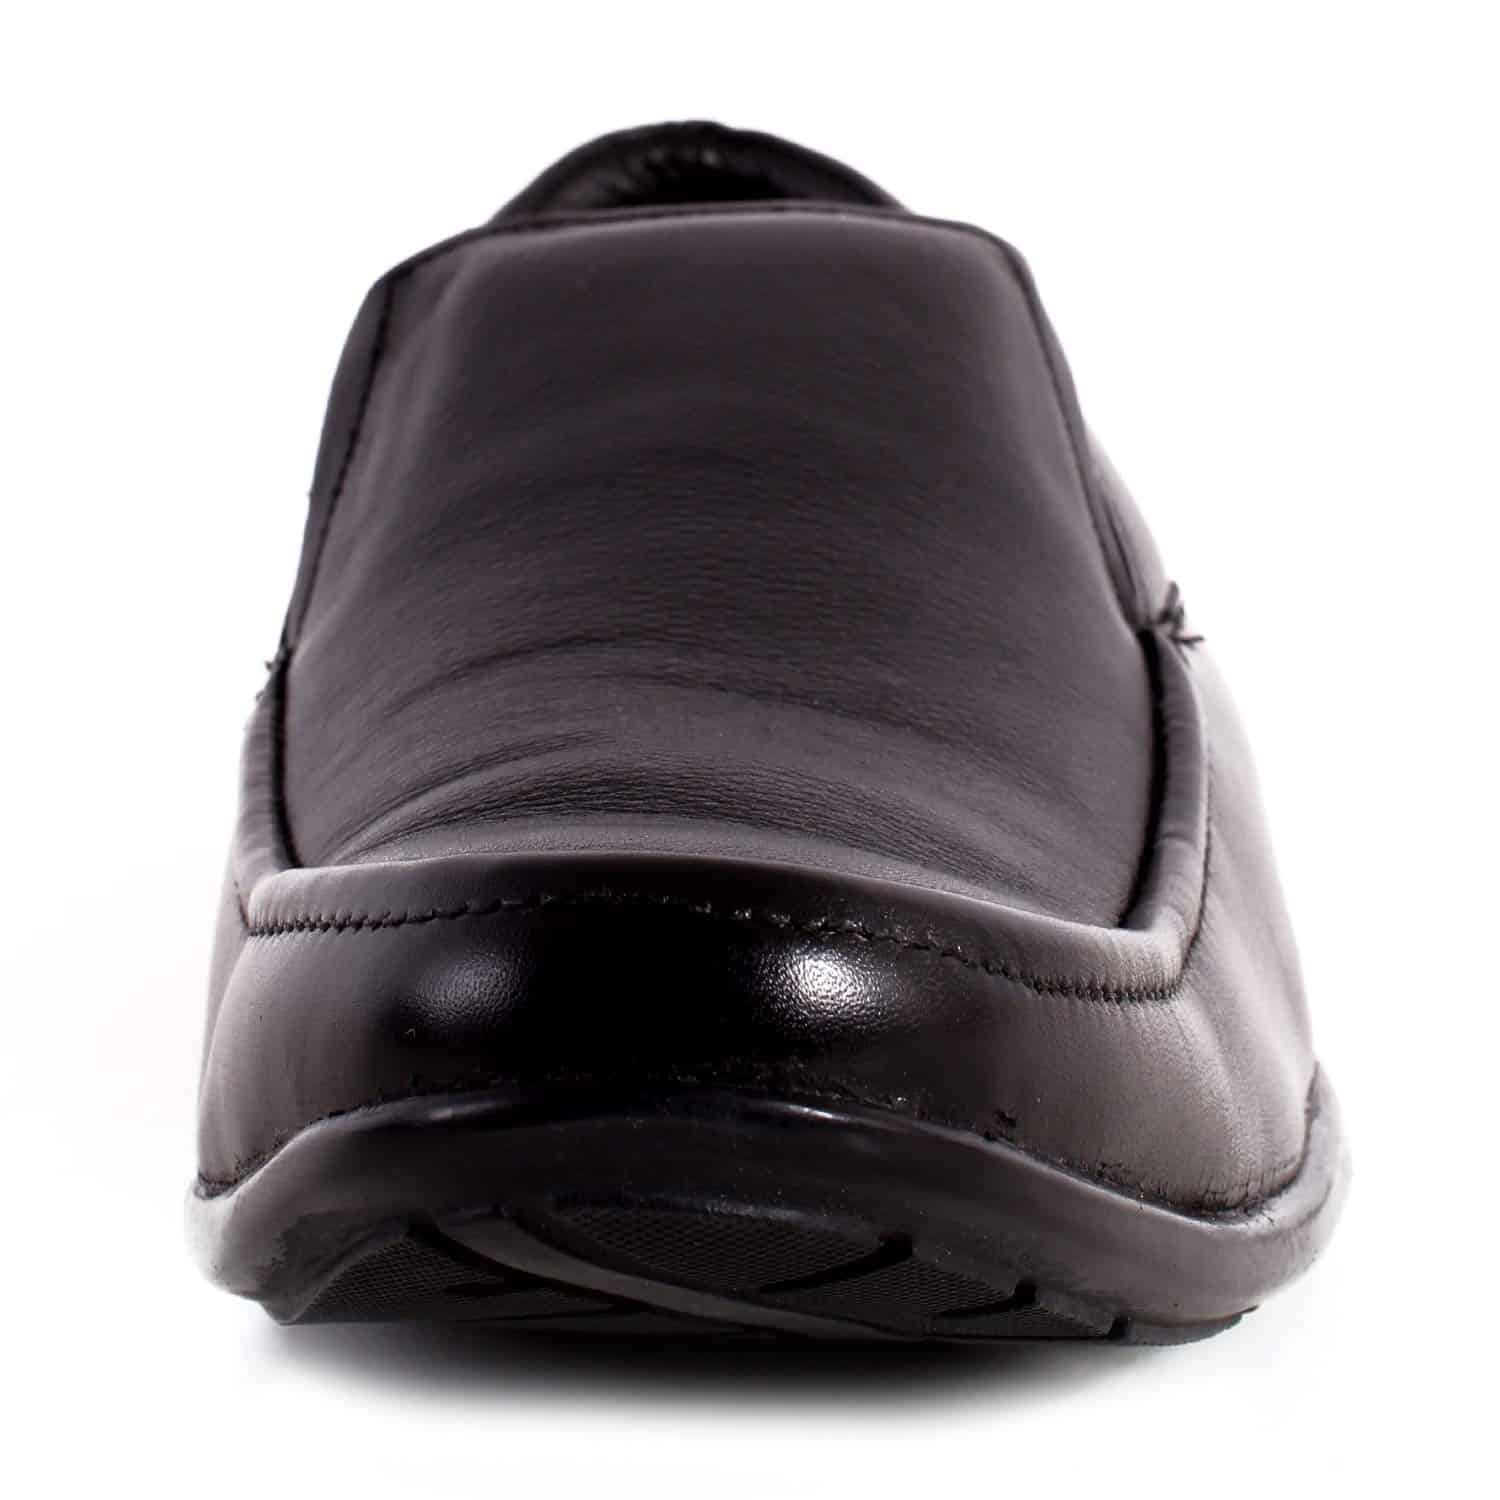 Numero Uno Tmsefd25 Black Derby Leather shoe | Online Store for Men ...